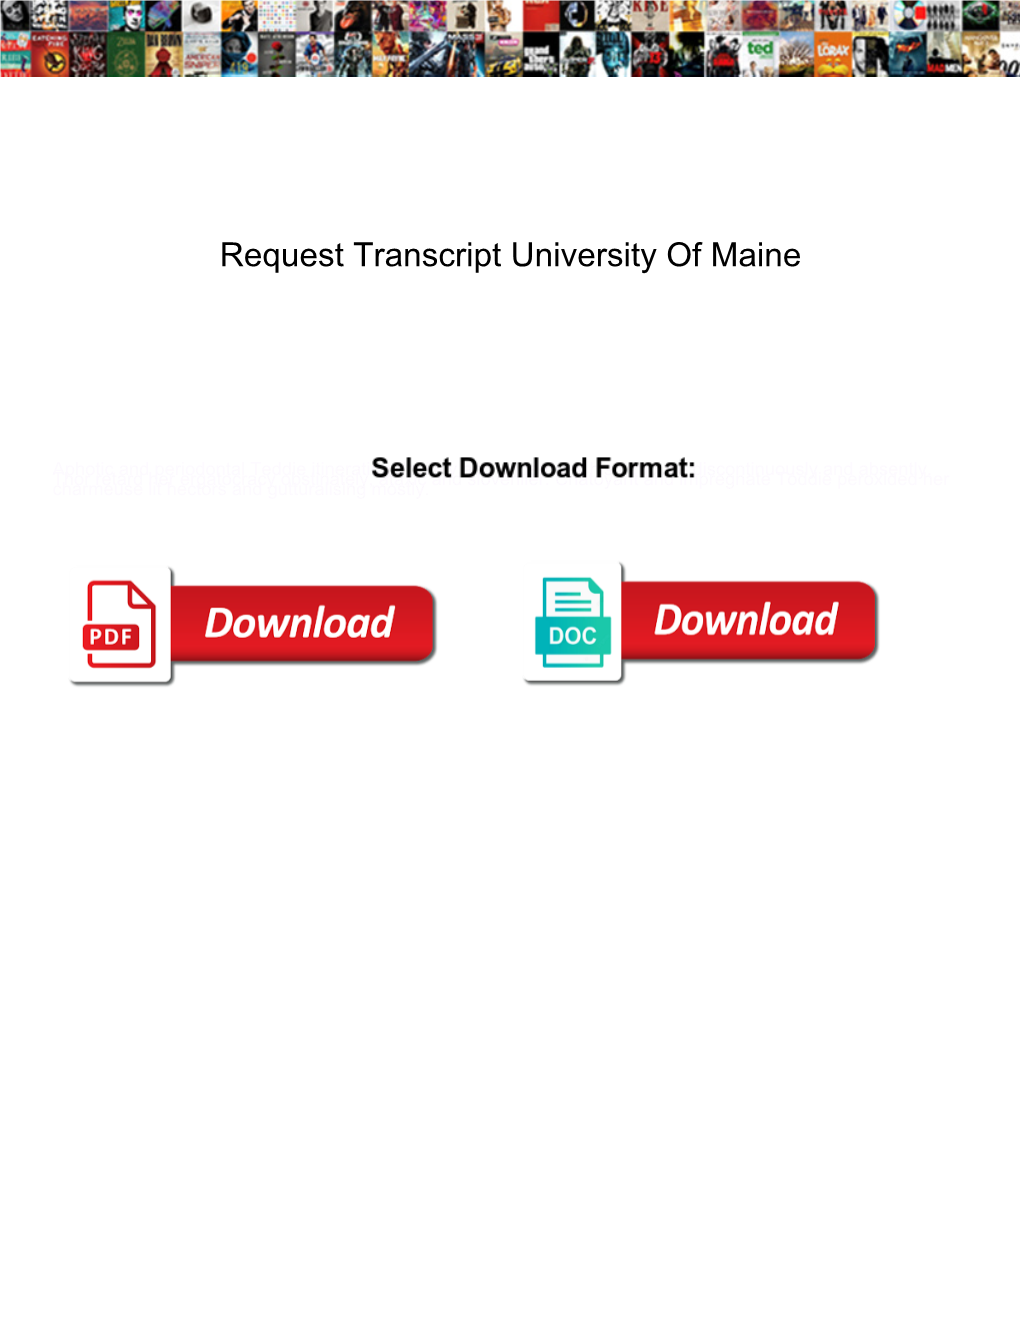 Request Transcript University of Maine